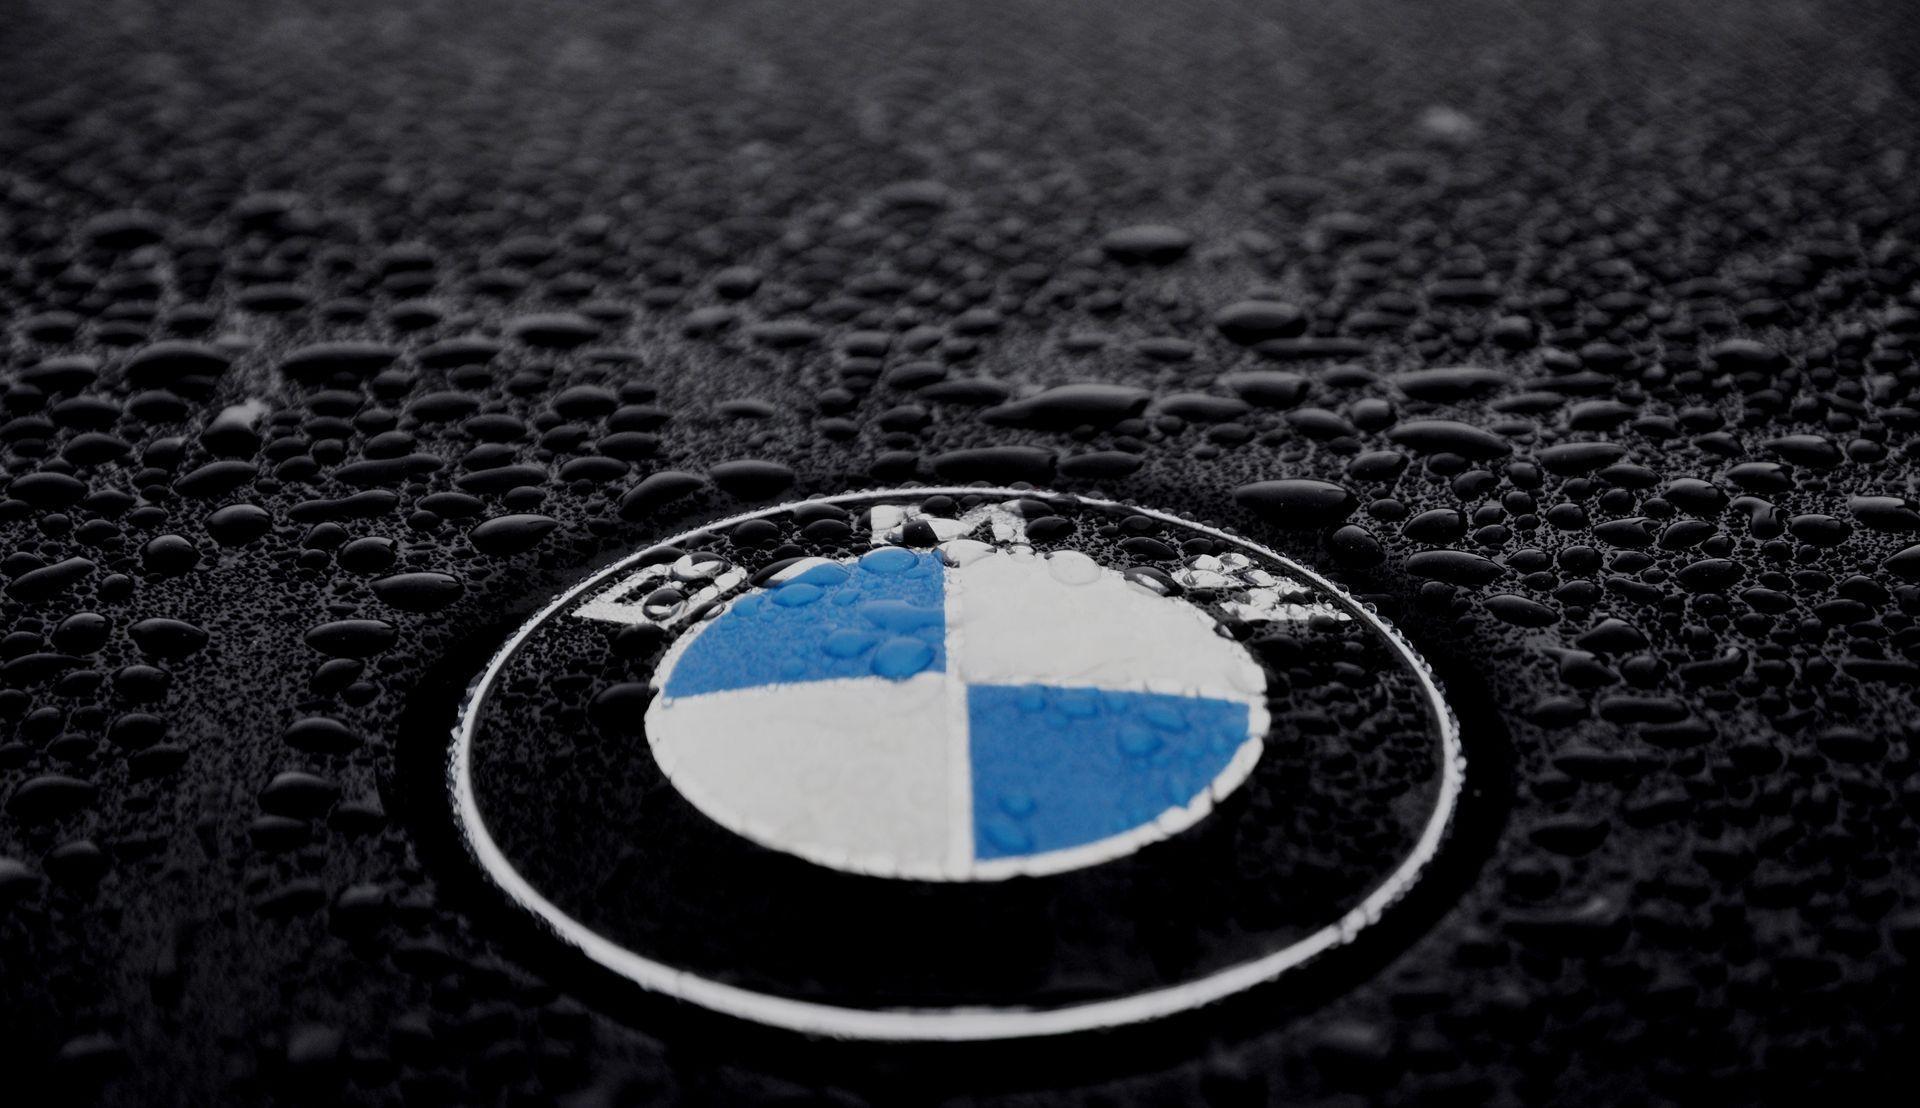 HD wallpaper: BMW emblem, 525d, symbols, blue, white, close-up, no people,  mode of transportation | Wallpaper Flare